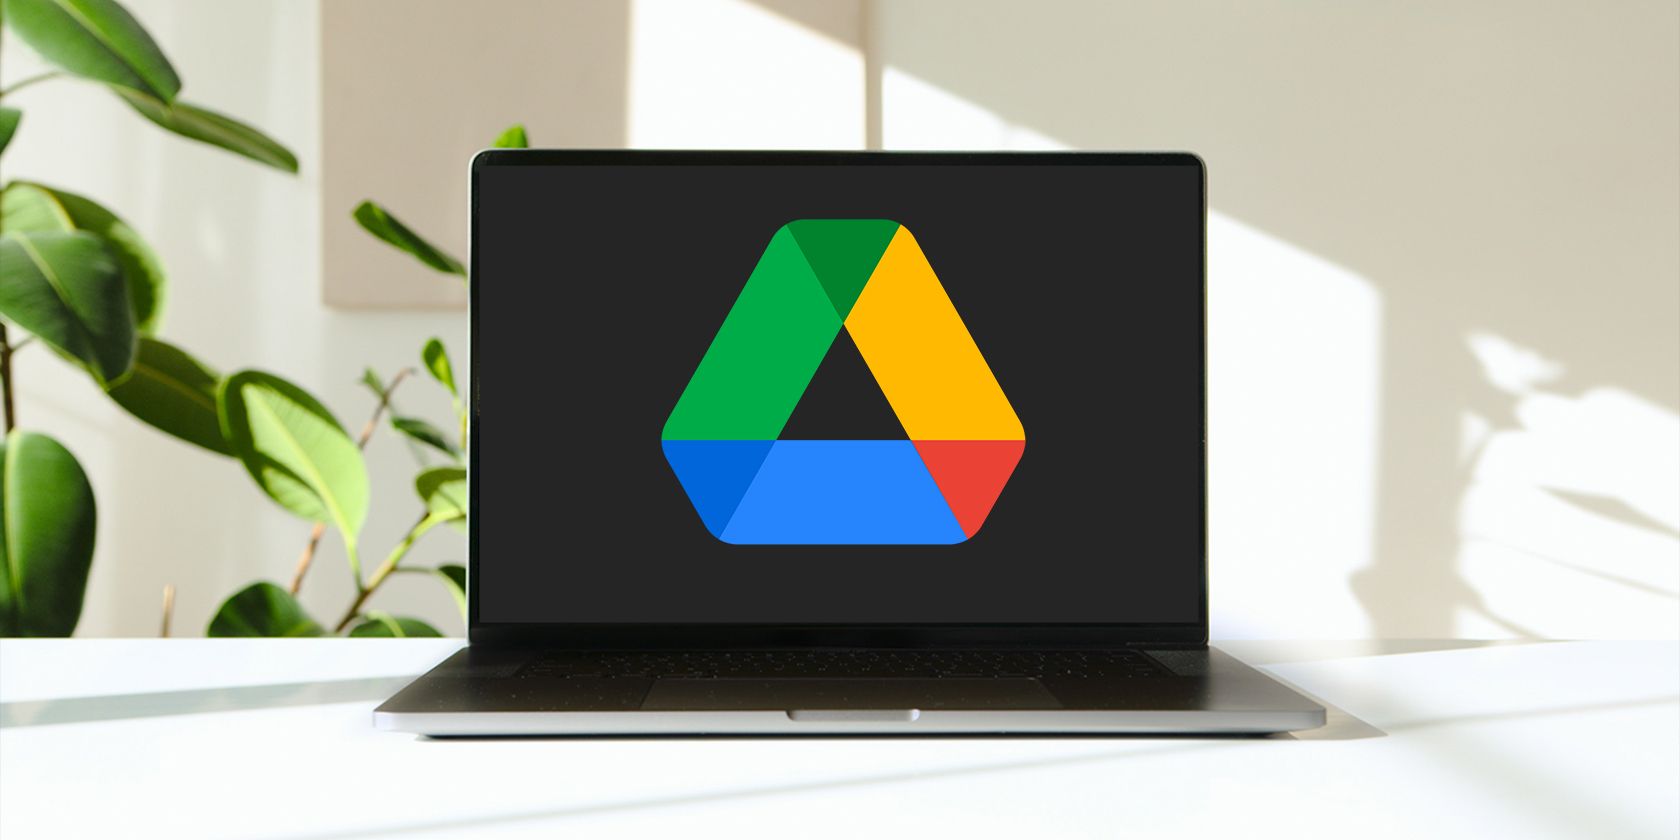 Google Drive logo on a laptop's screen